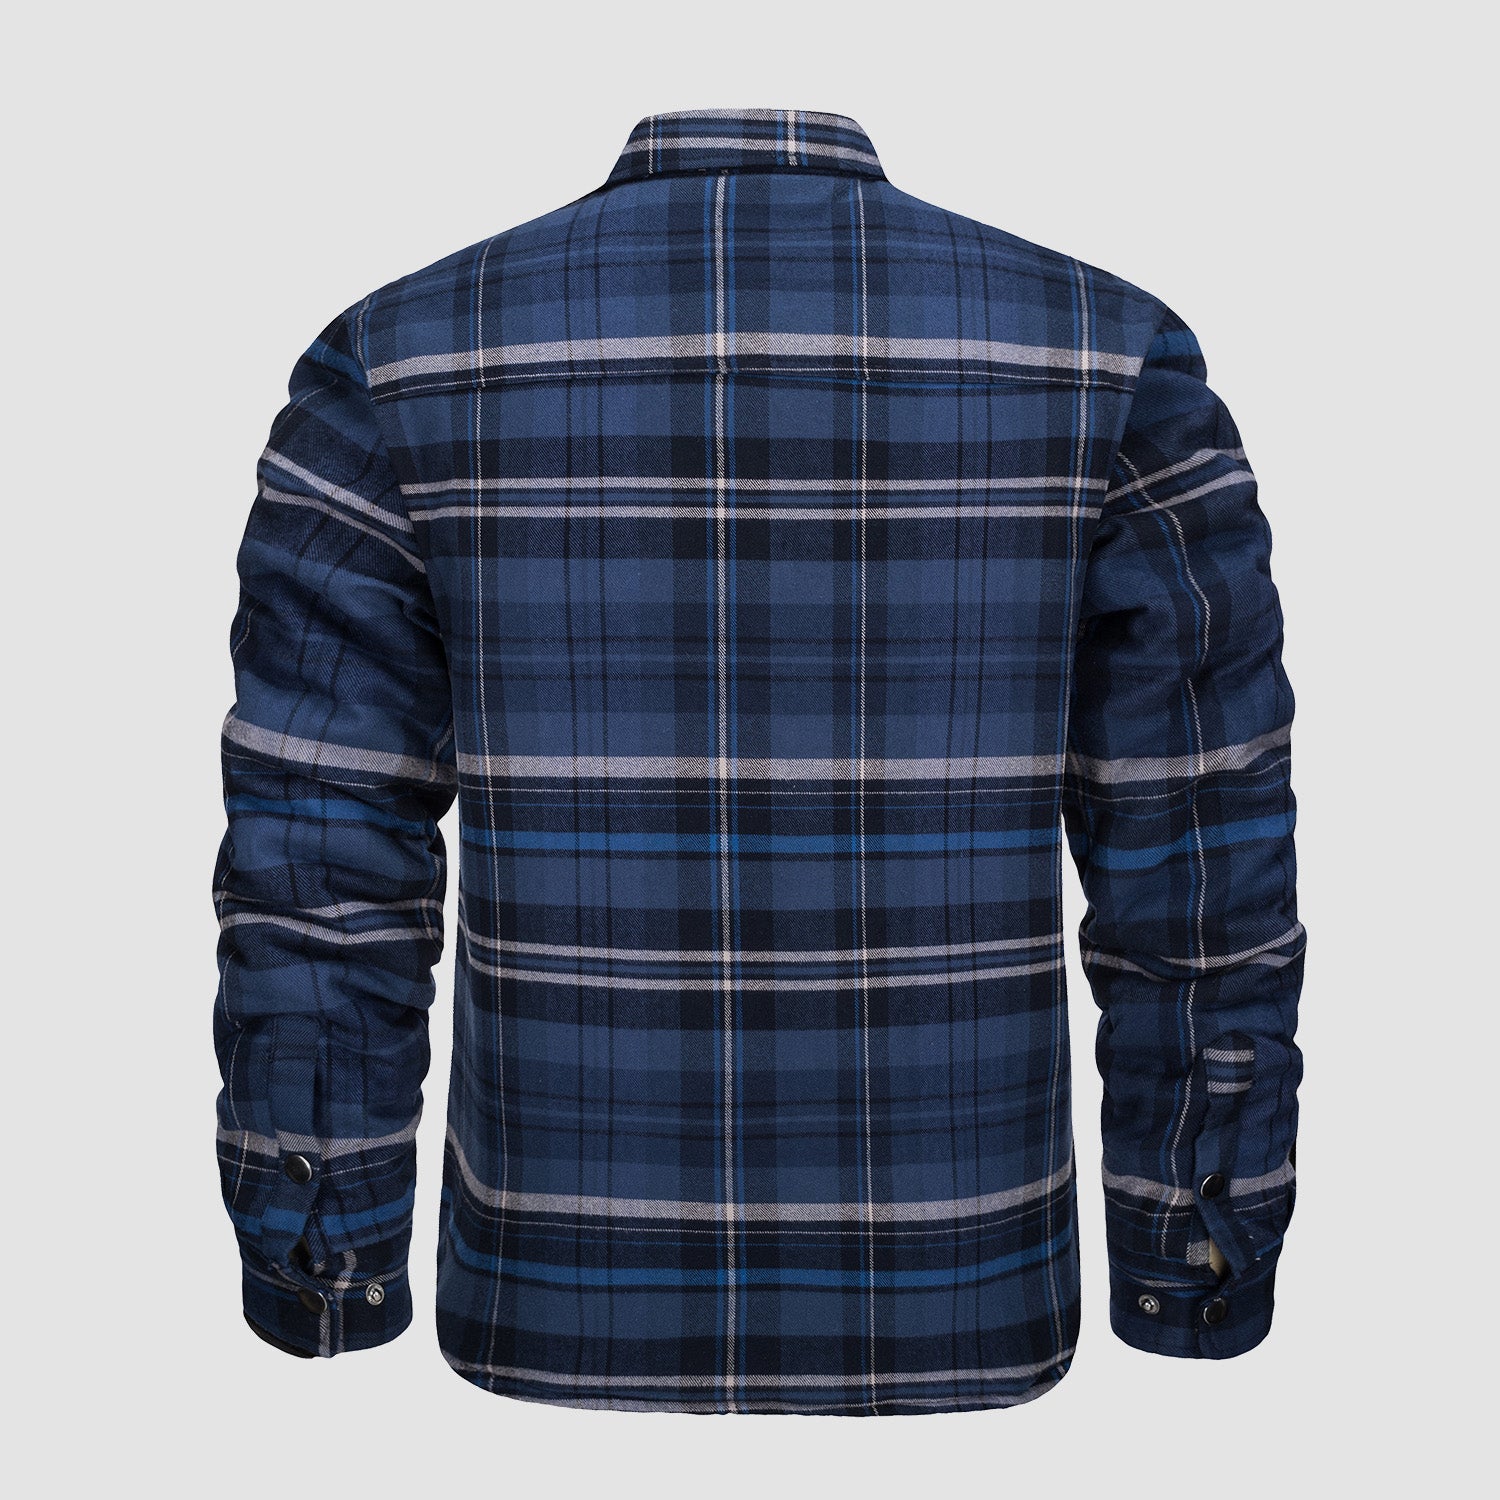  KEFITEVD Men's Flannel Shirts Jacket Long Sleeve